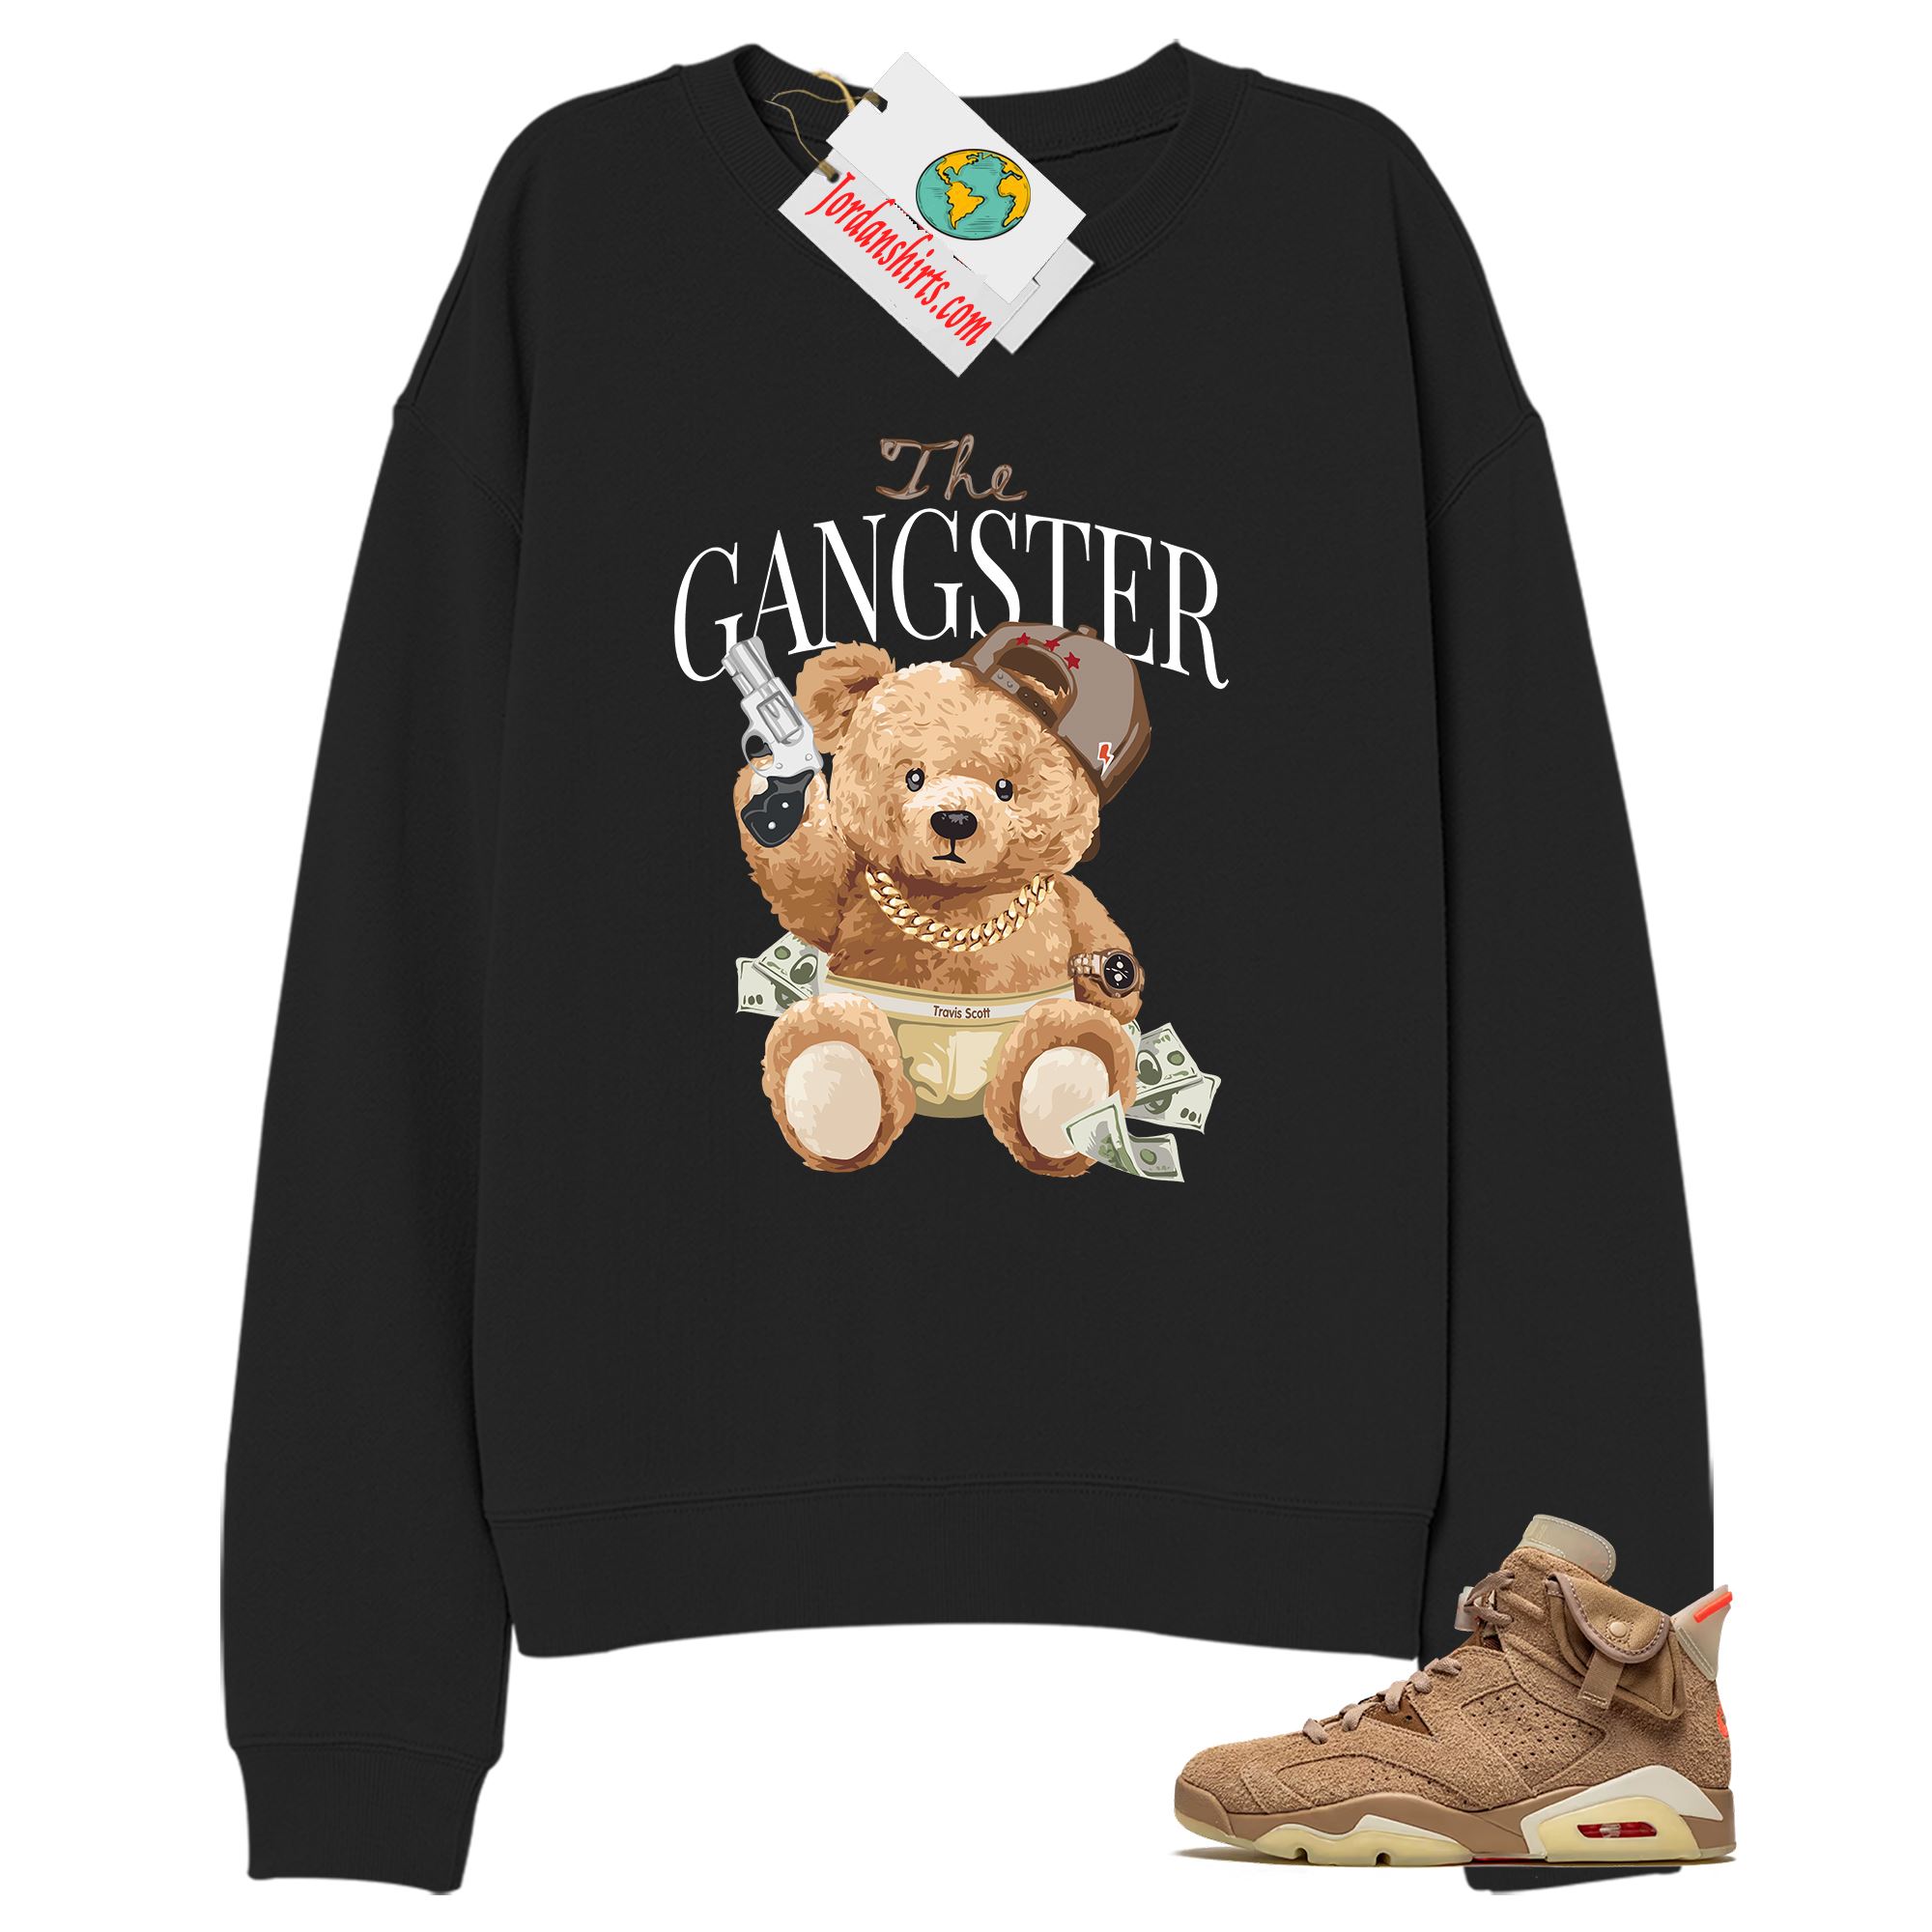 Jordan 6 Sweatshirt, Teddy Bear The Gangster Black Sweatshirt Air Jordan 6 Travis Scott 6s Full Size Up To 5xl